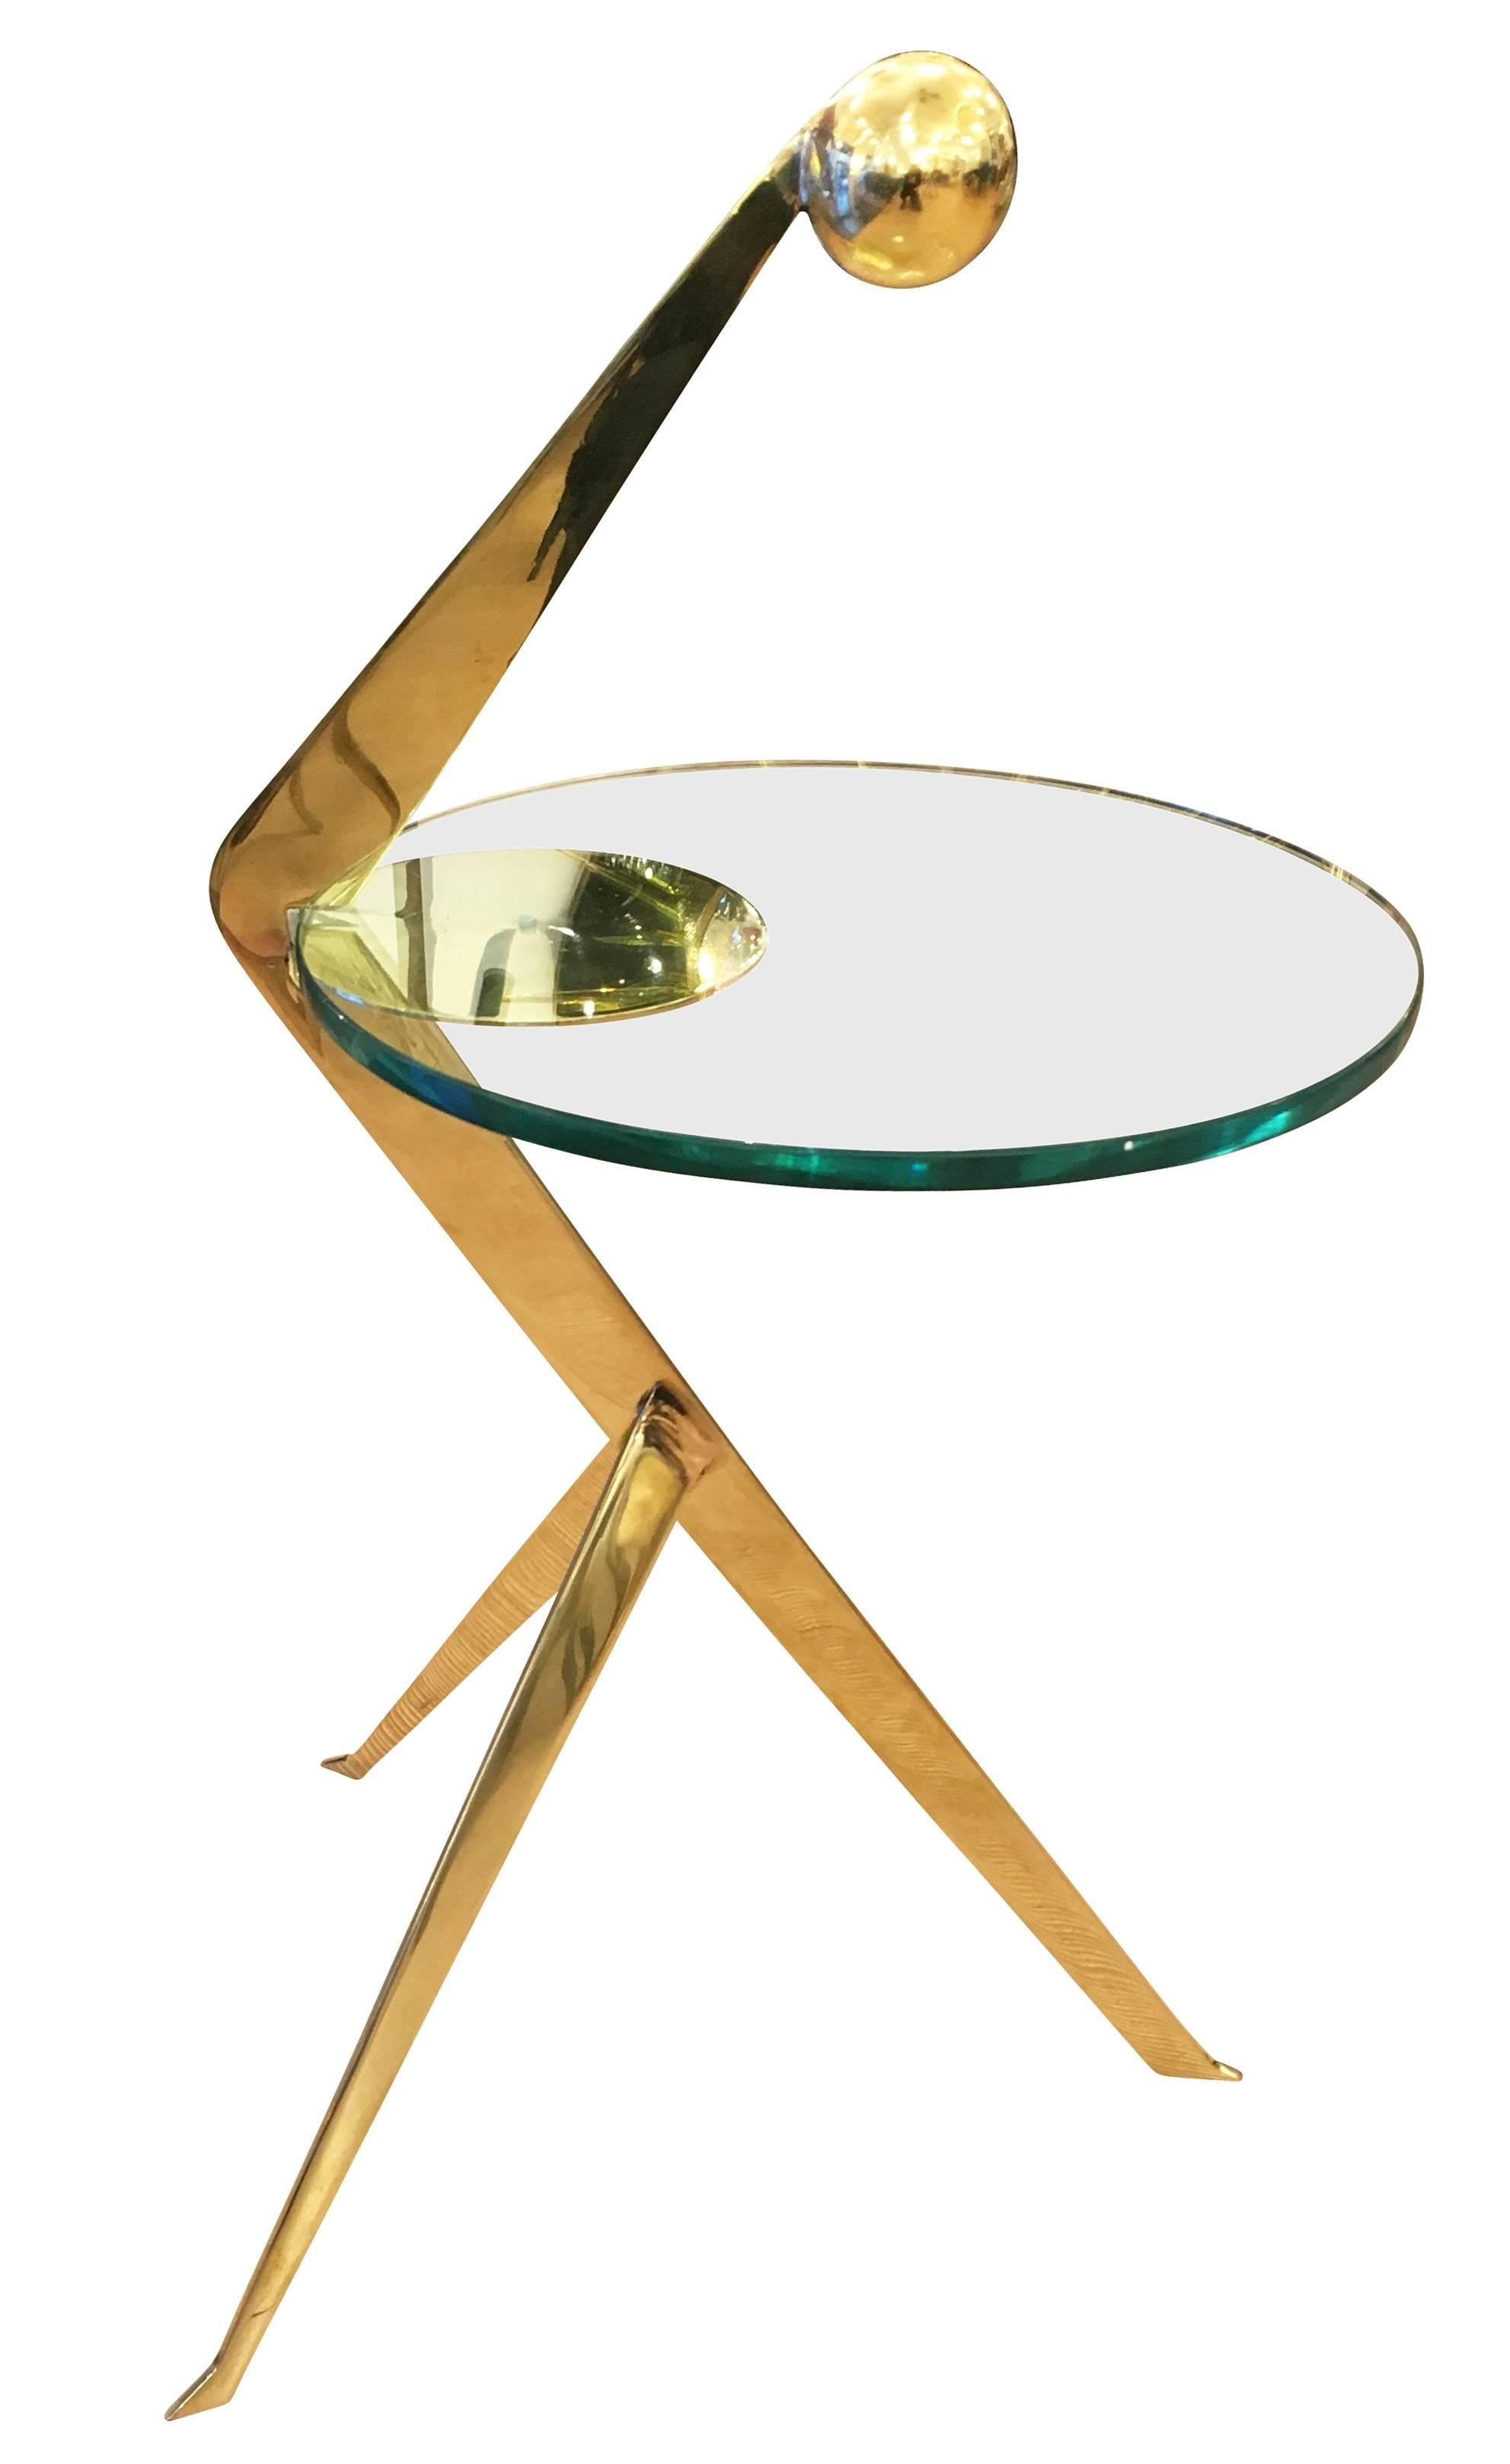 Modern Tiramisu' Side Table by Gasapare Asaro for formA